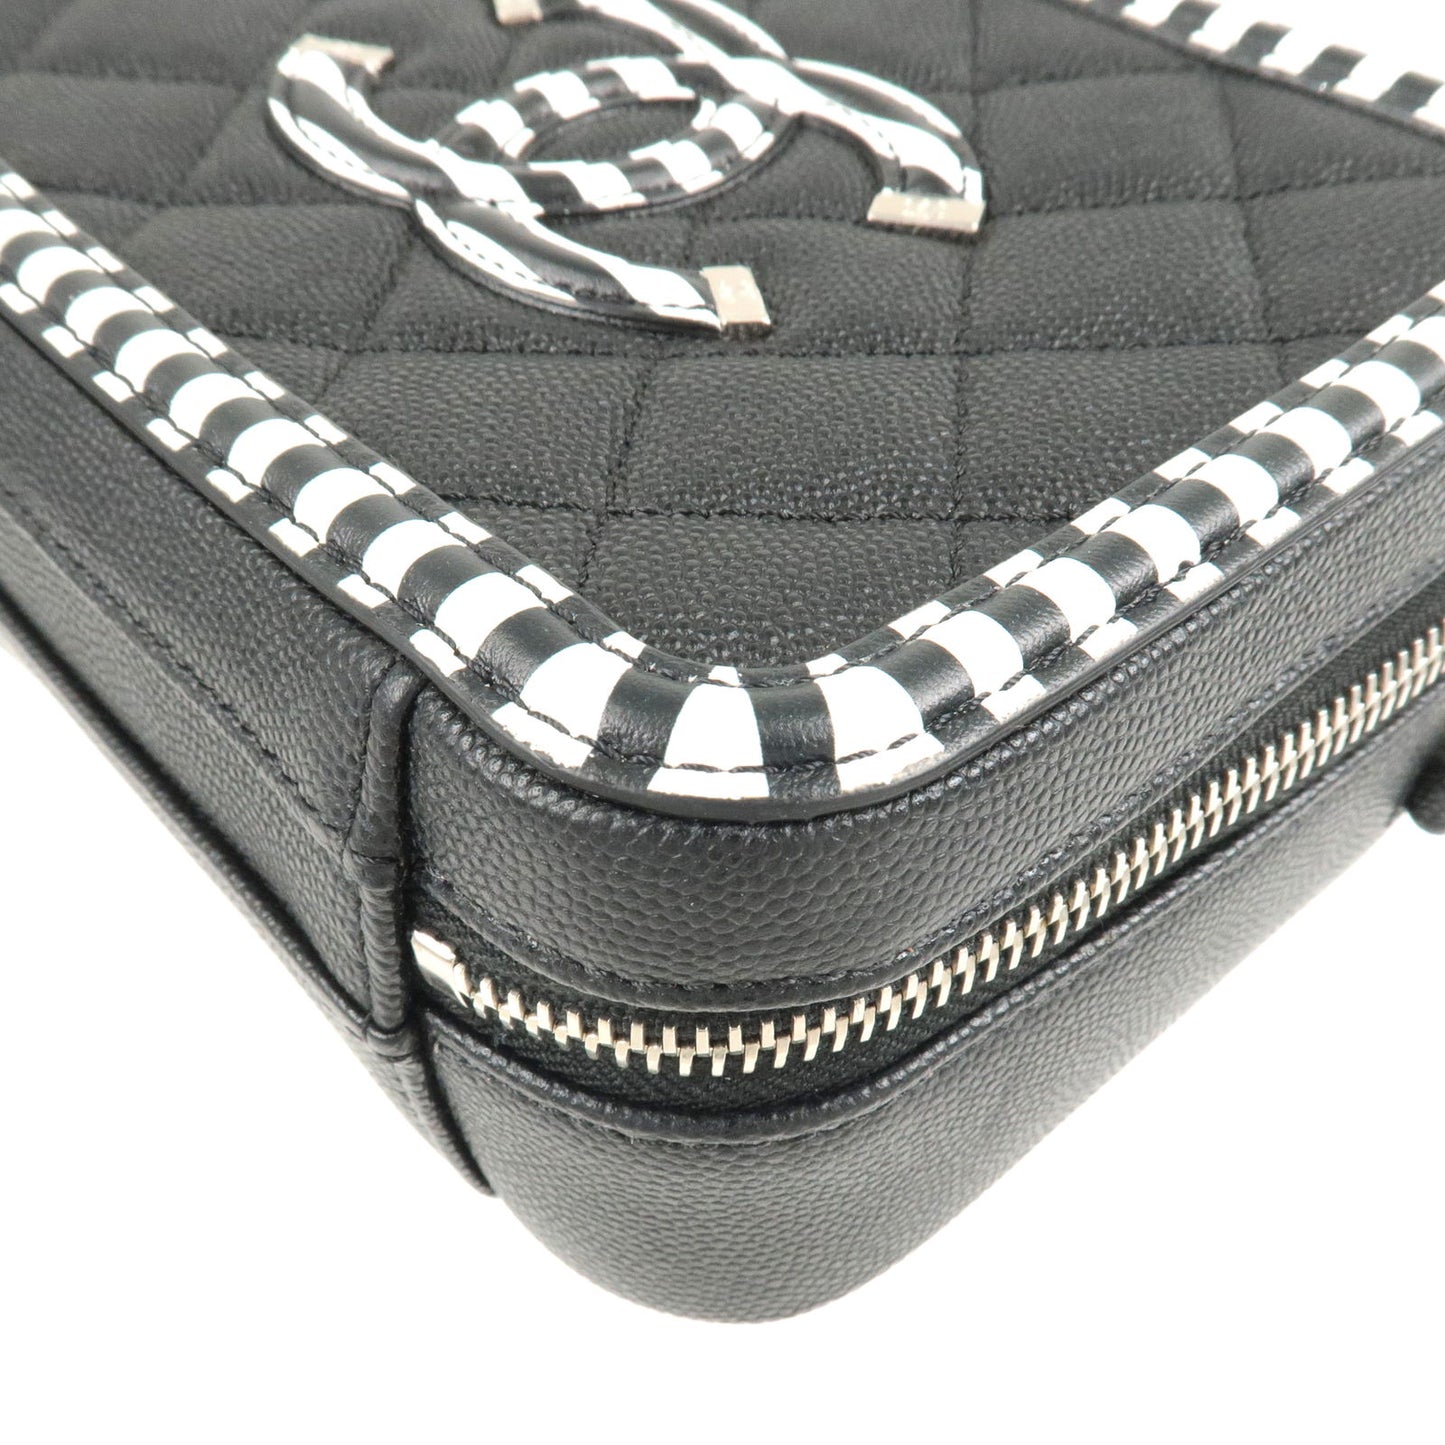 CHANEL CC Filigree Caviar Skin Vanity Case 2Way Bag Stripe A93342